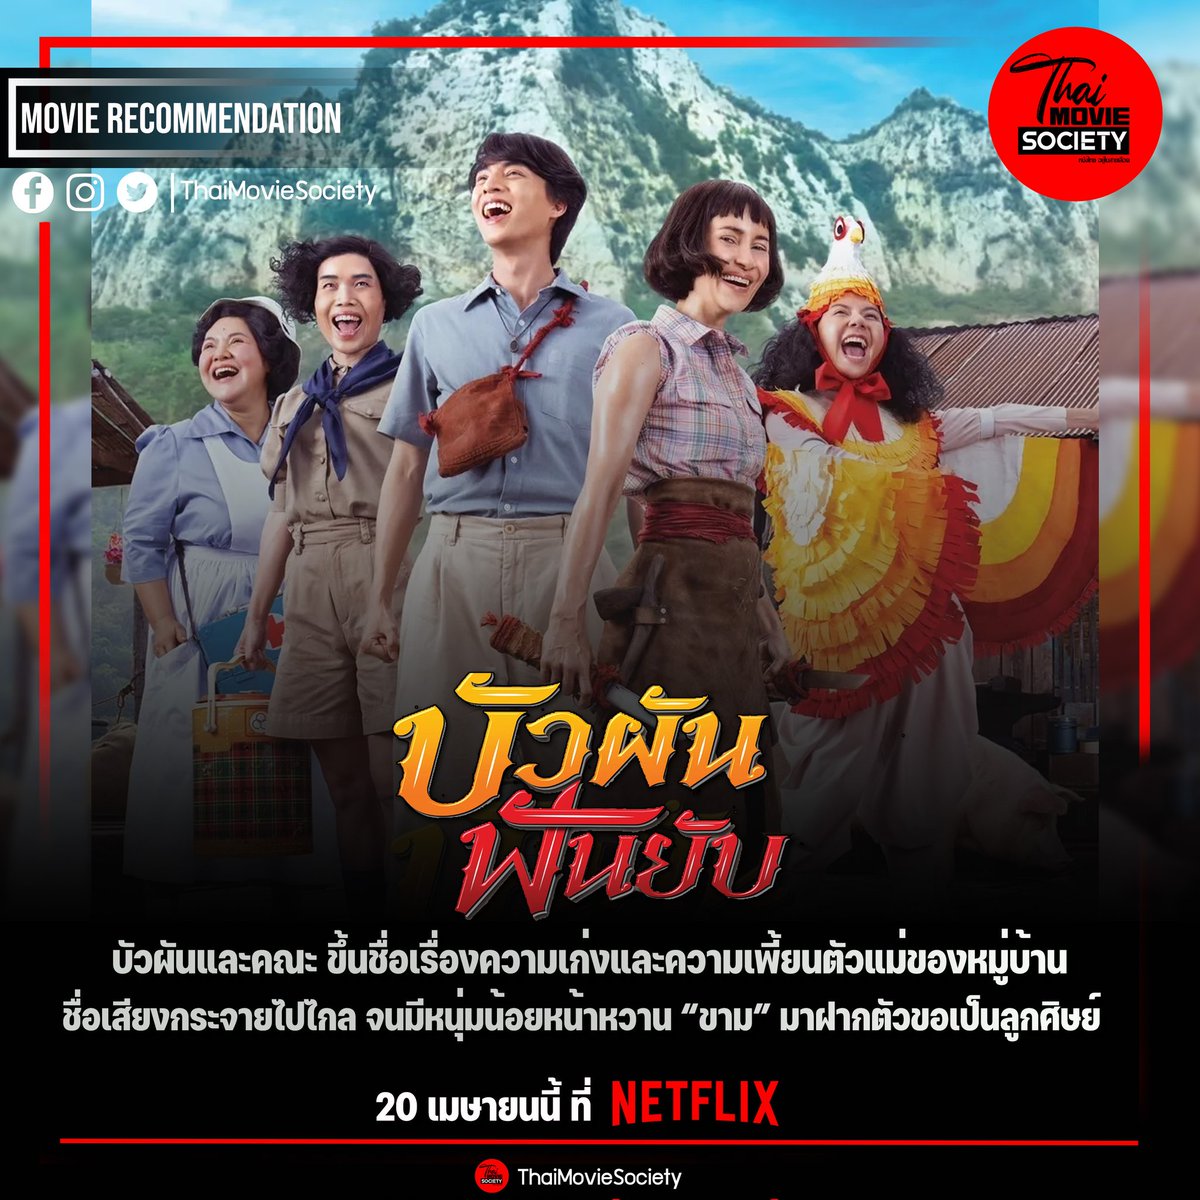 ° On April 20 BuaPanFunYap
It will be available on Netflix Thailand! 📺

Twitter: @ThaimovieSociet

#thaimoviesociety
@gulfkanawut 
#annethong 
#รฤกโปรดั๊กชั่น 
#PhiBalls 
#ลูกบอลของคุณบิ๊กกลัฟ
#BuaPanFunYap 
@Gulfkanawutofc 
#waanjaiMewGulf